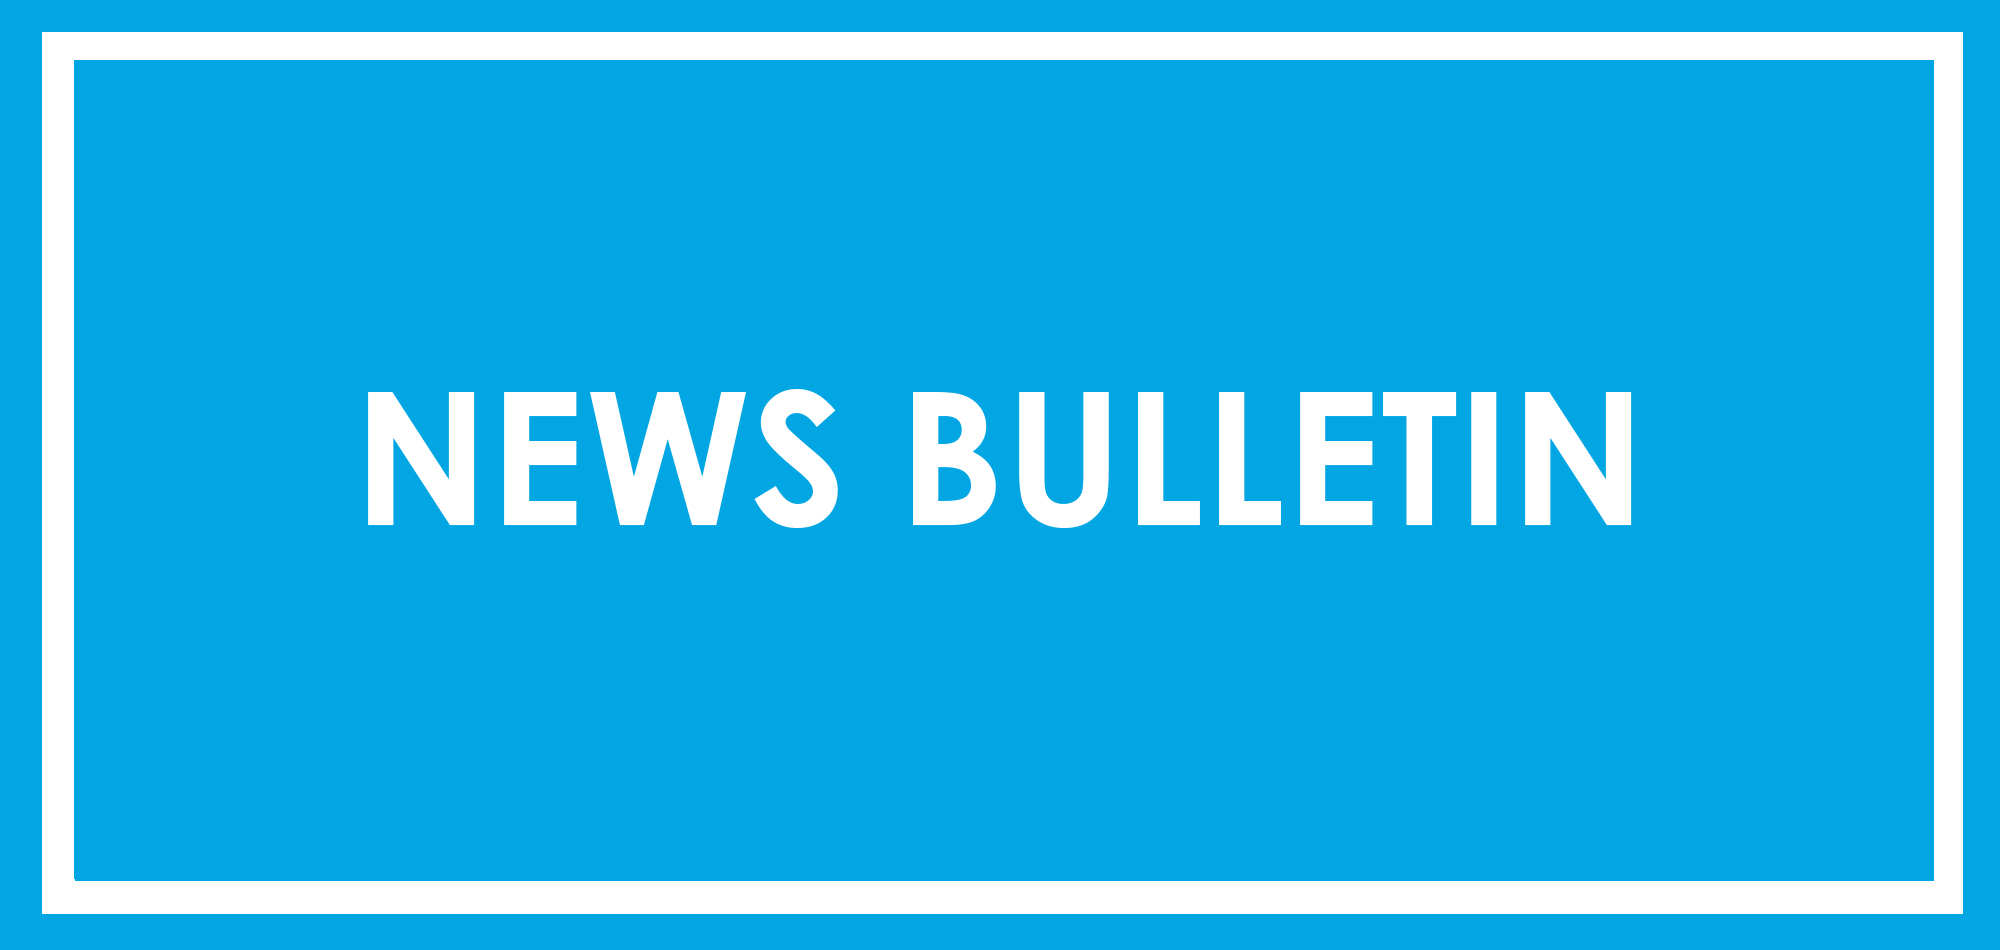 News Bulletin - 06.10.21